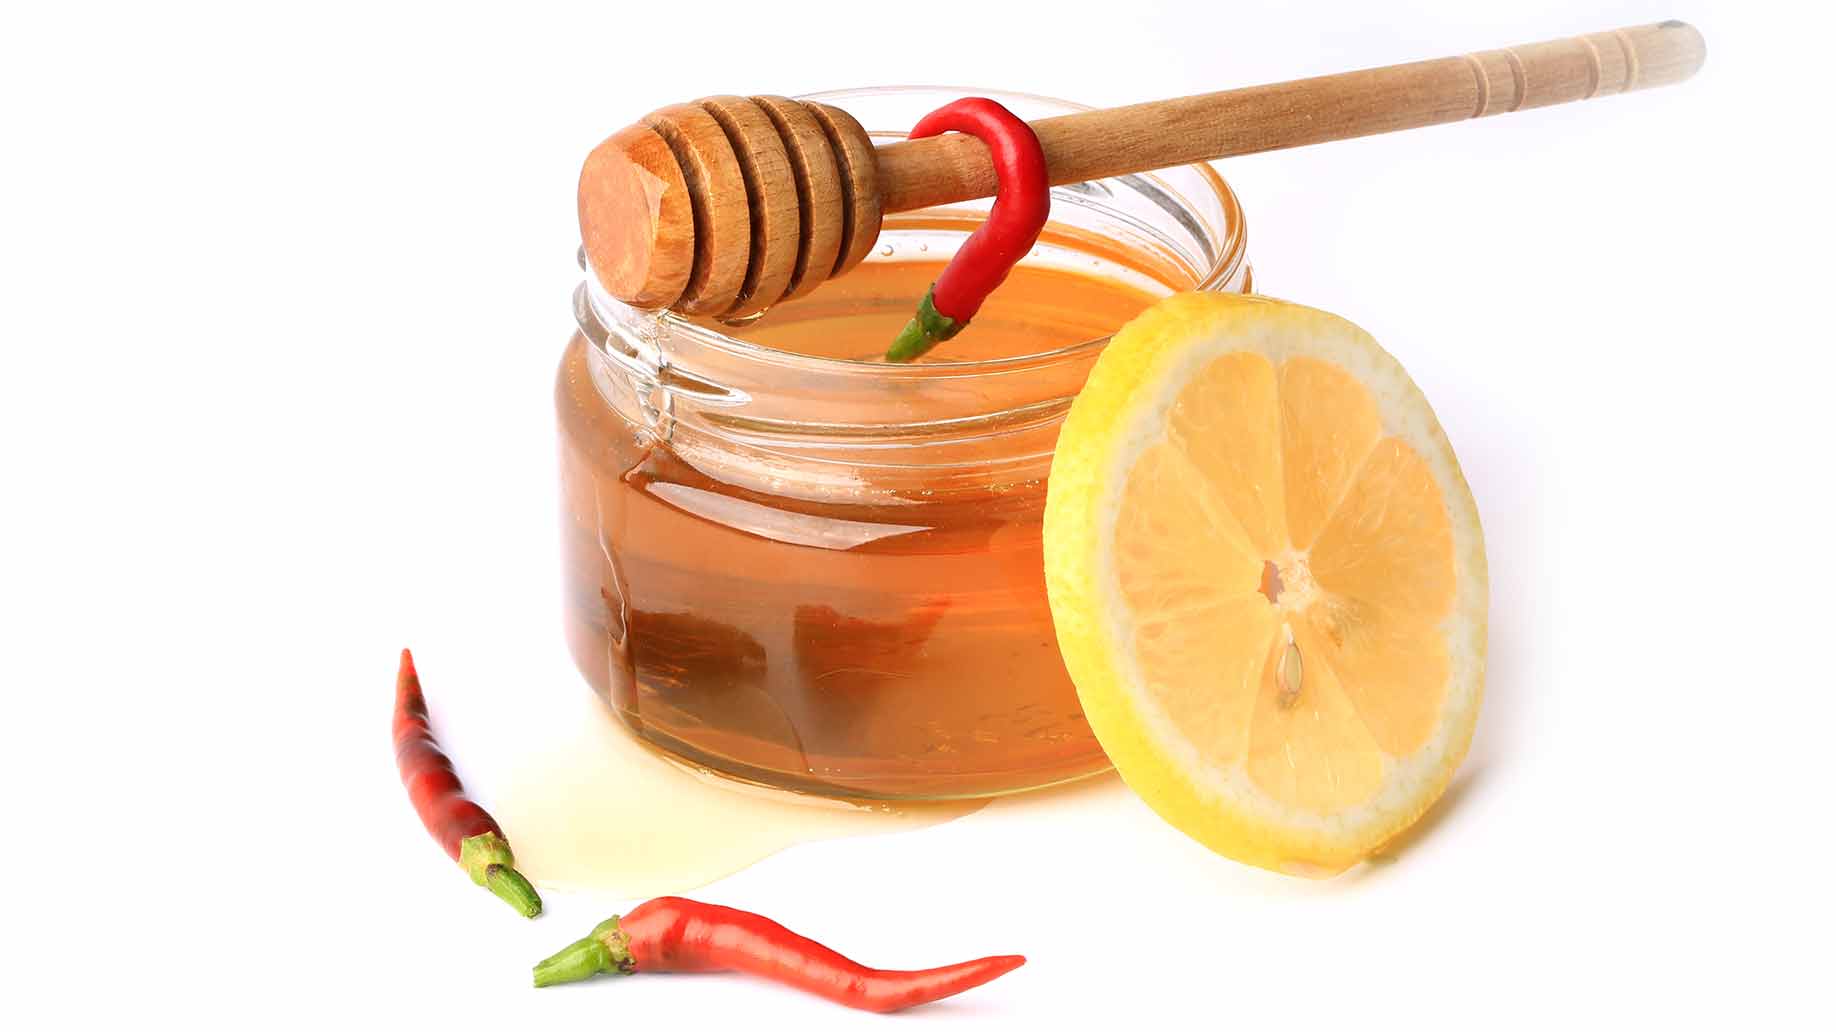 colon cleanse detox diy lemon cayenne pepper honey drink remove toxins naturally